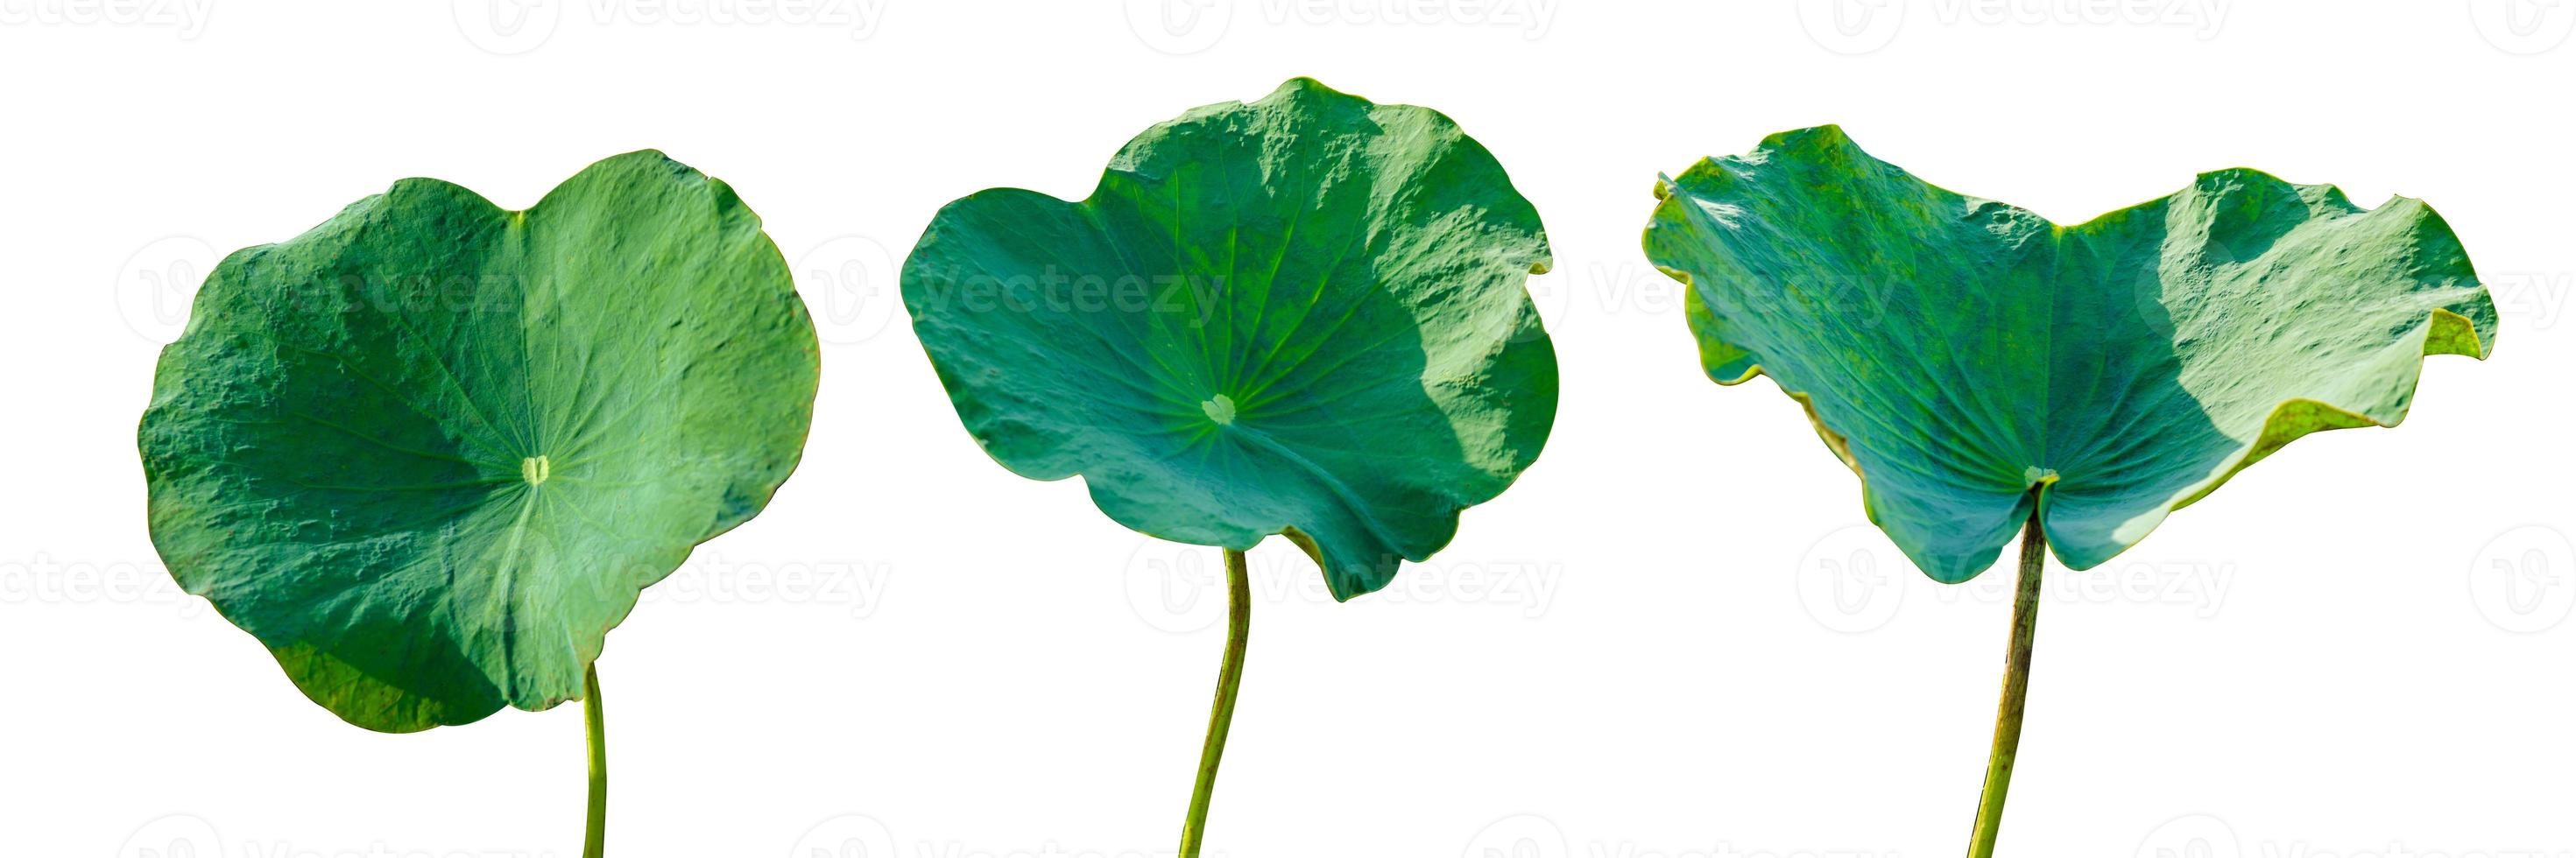 Lotus leaf isolate 3 samling av vit bakgrund foto